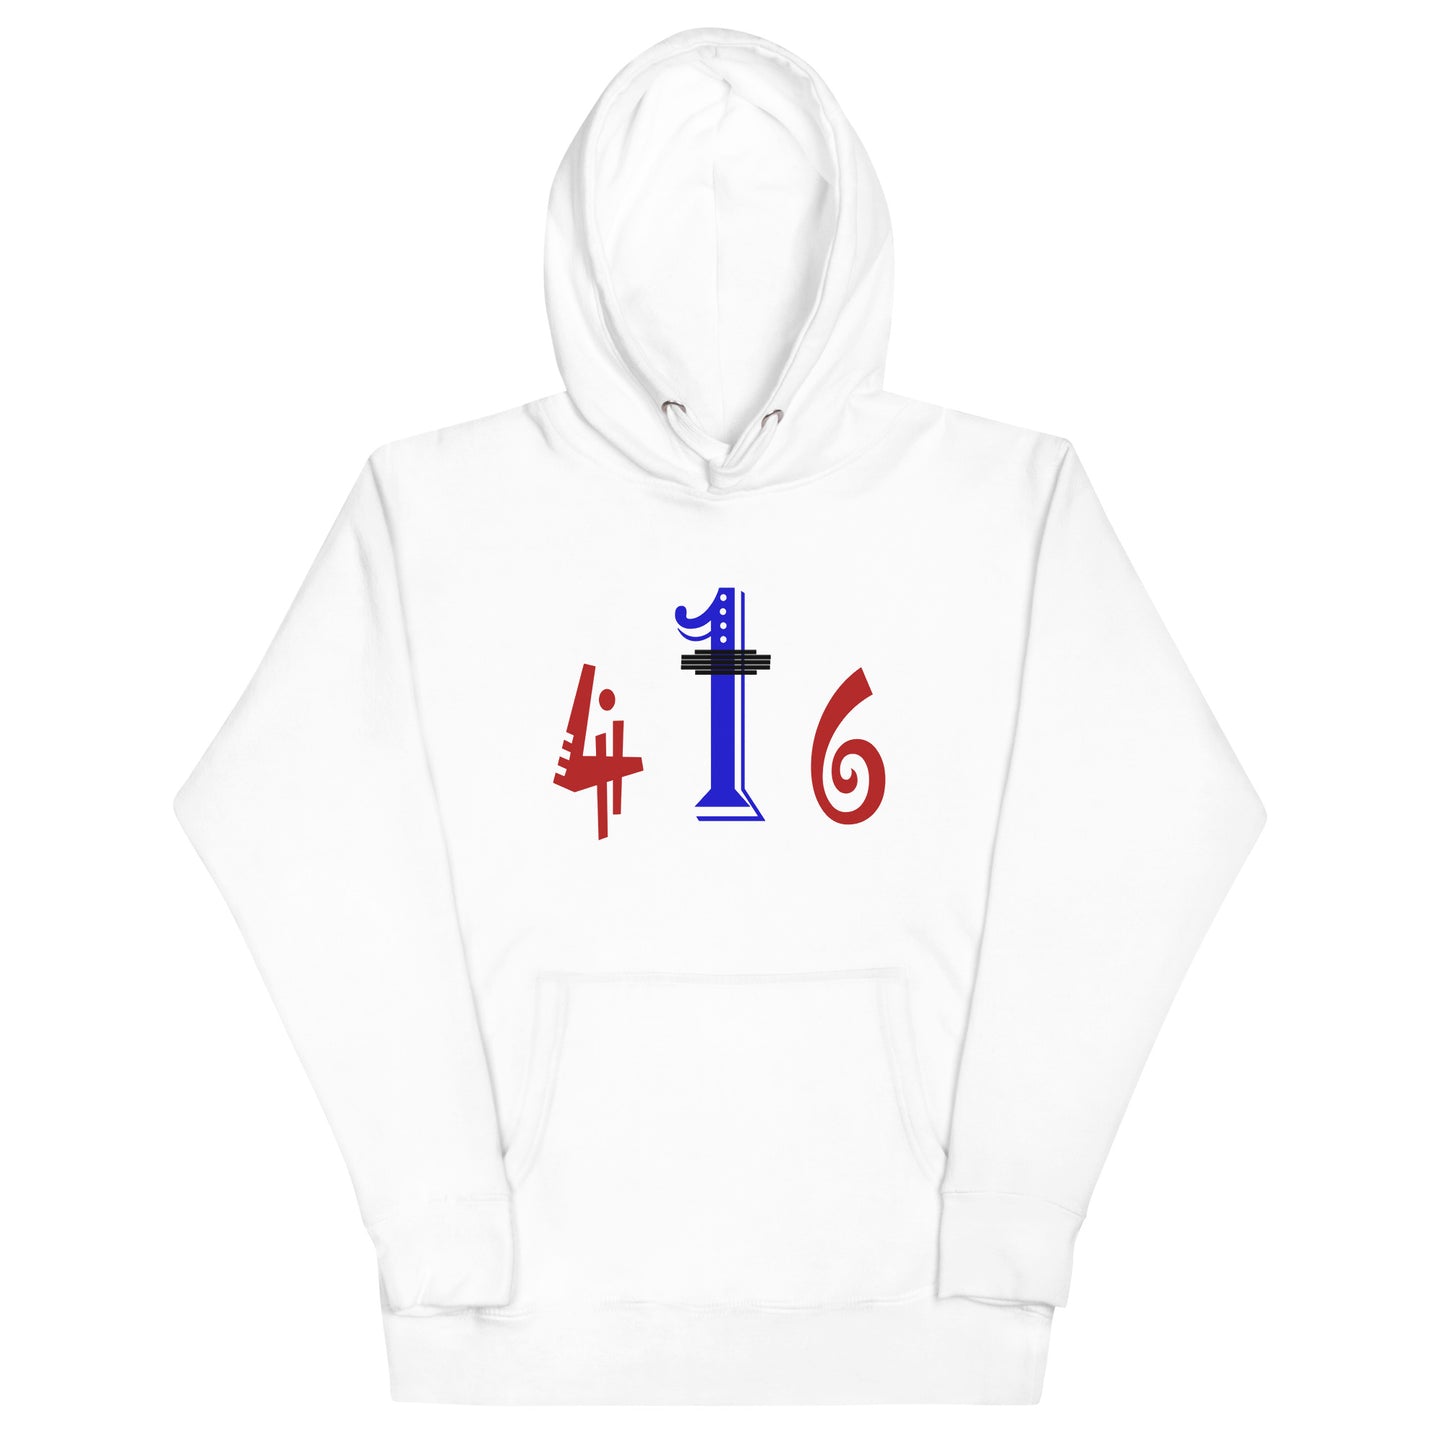 Four One SIX - Premium unisex hoodie